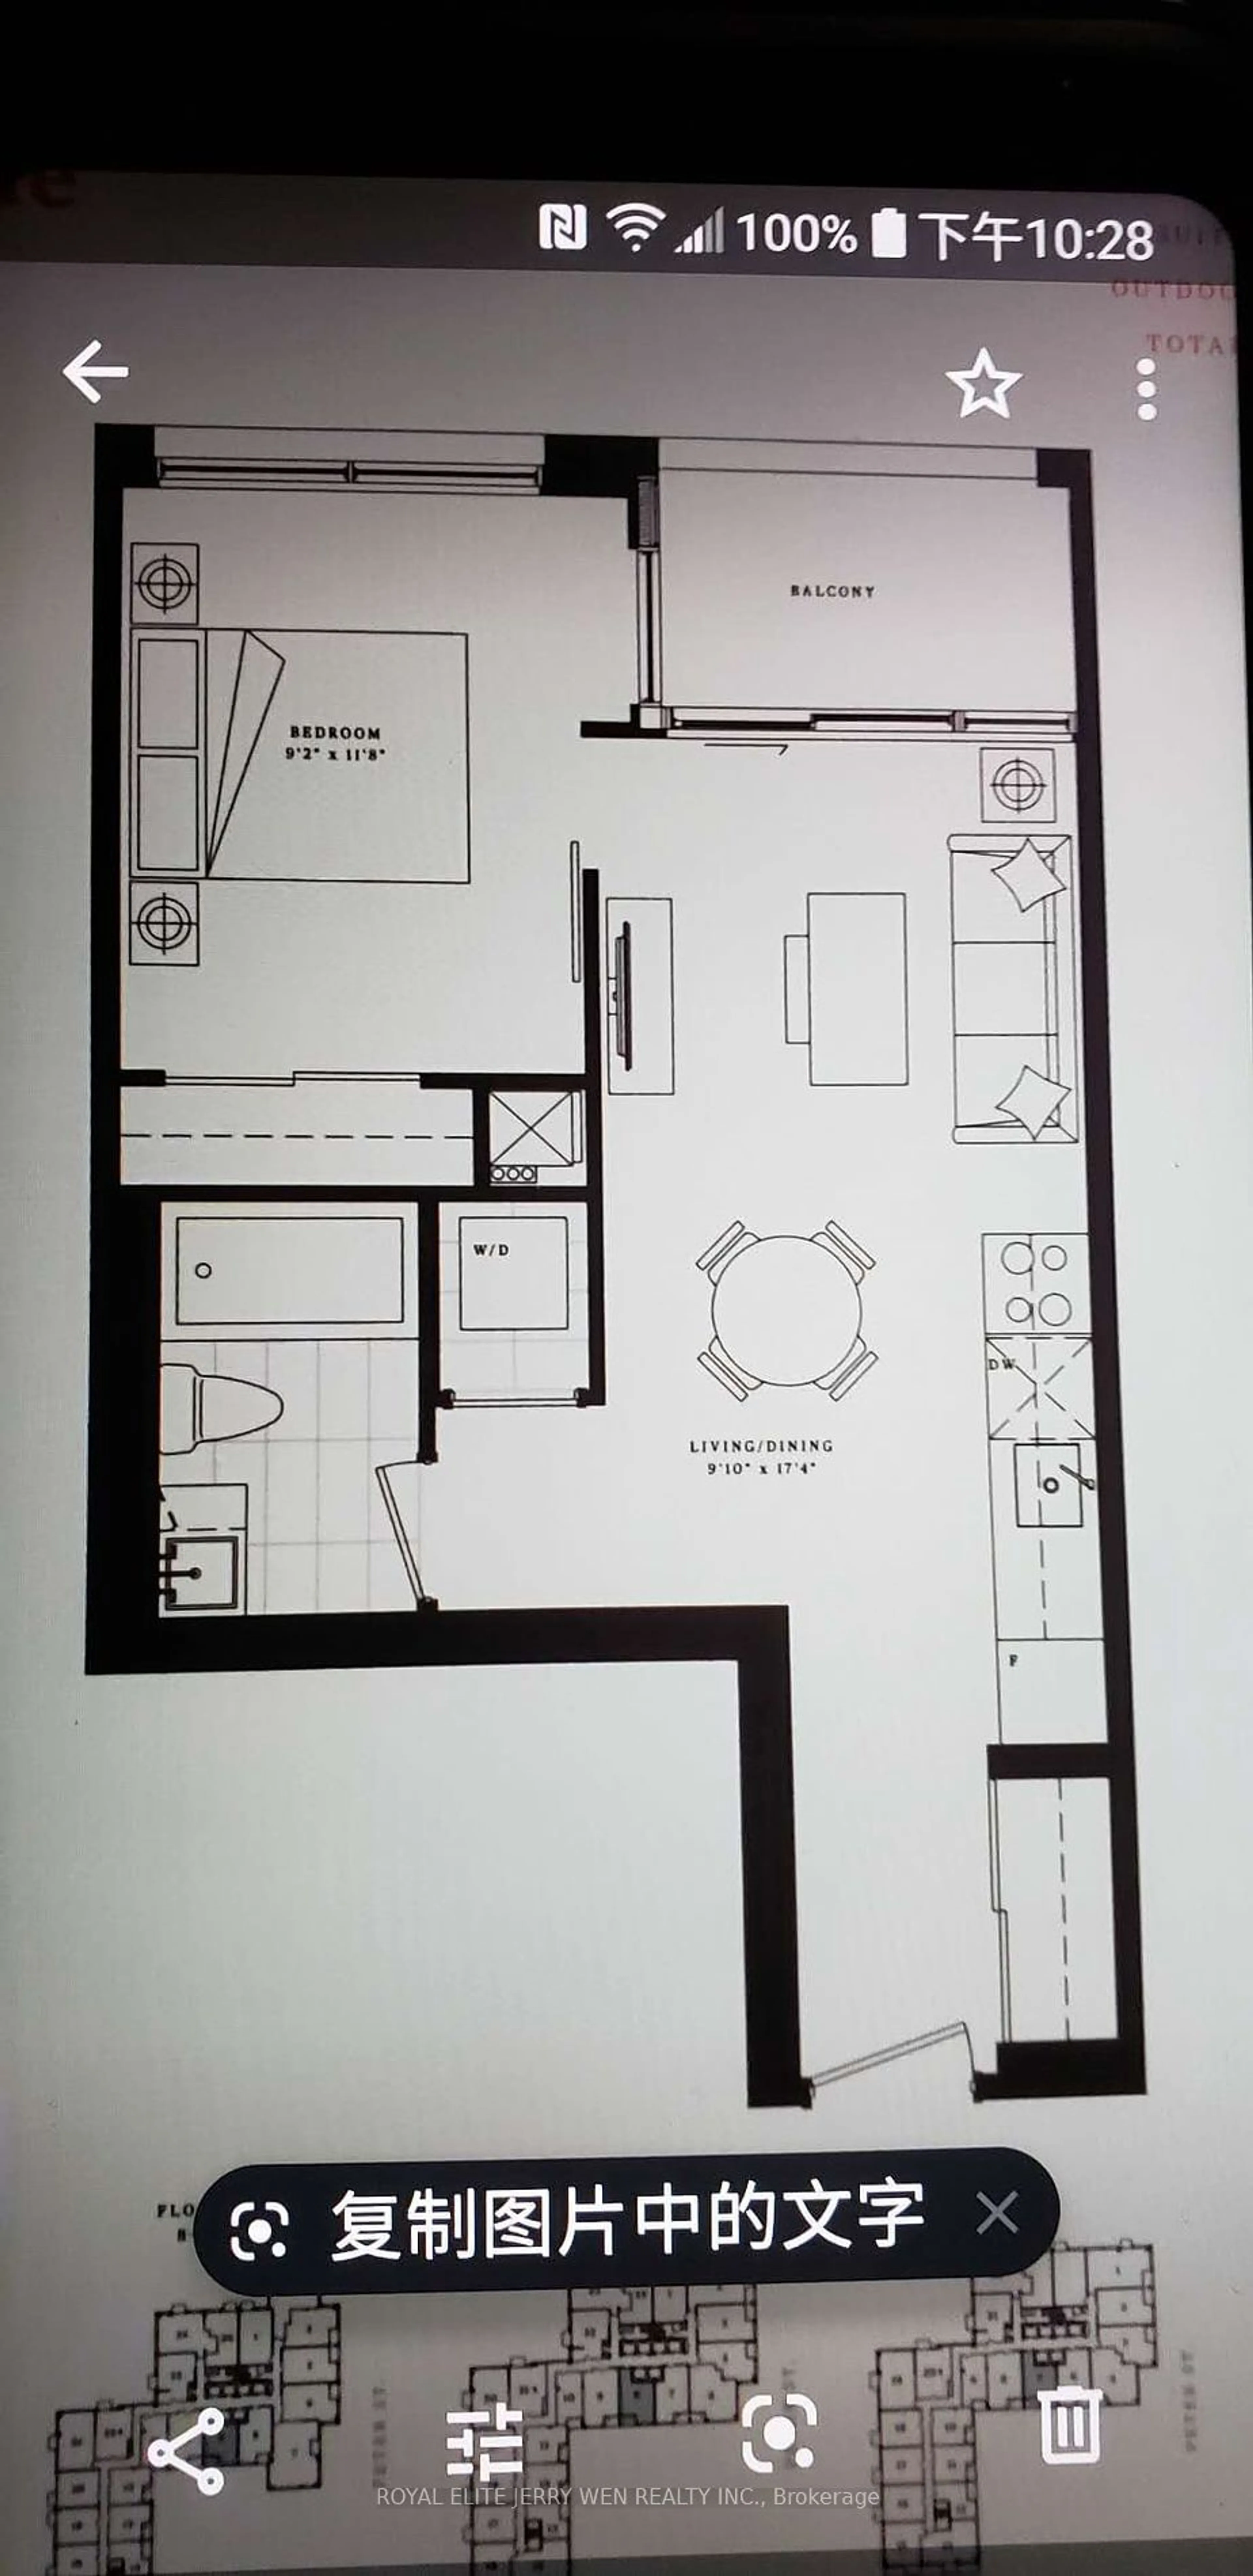 Floor plan for 108 Peter St #511, Toronto Ontario M5V 0W2